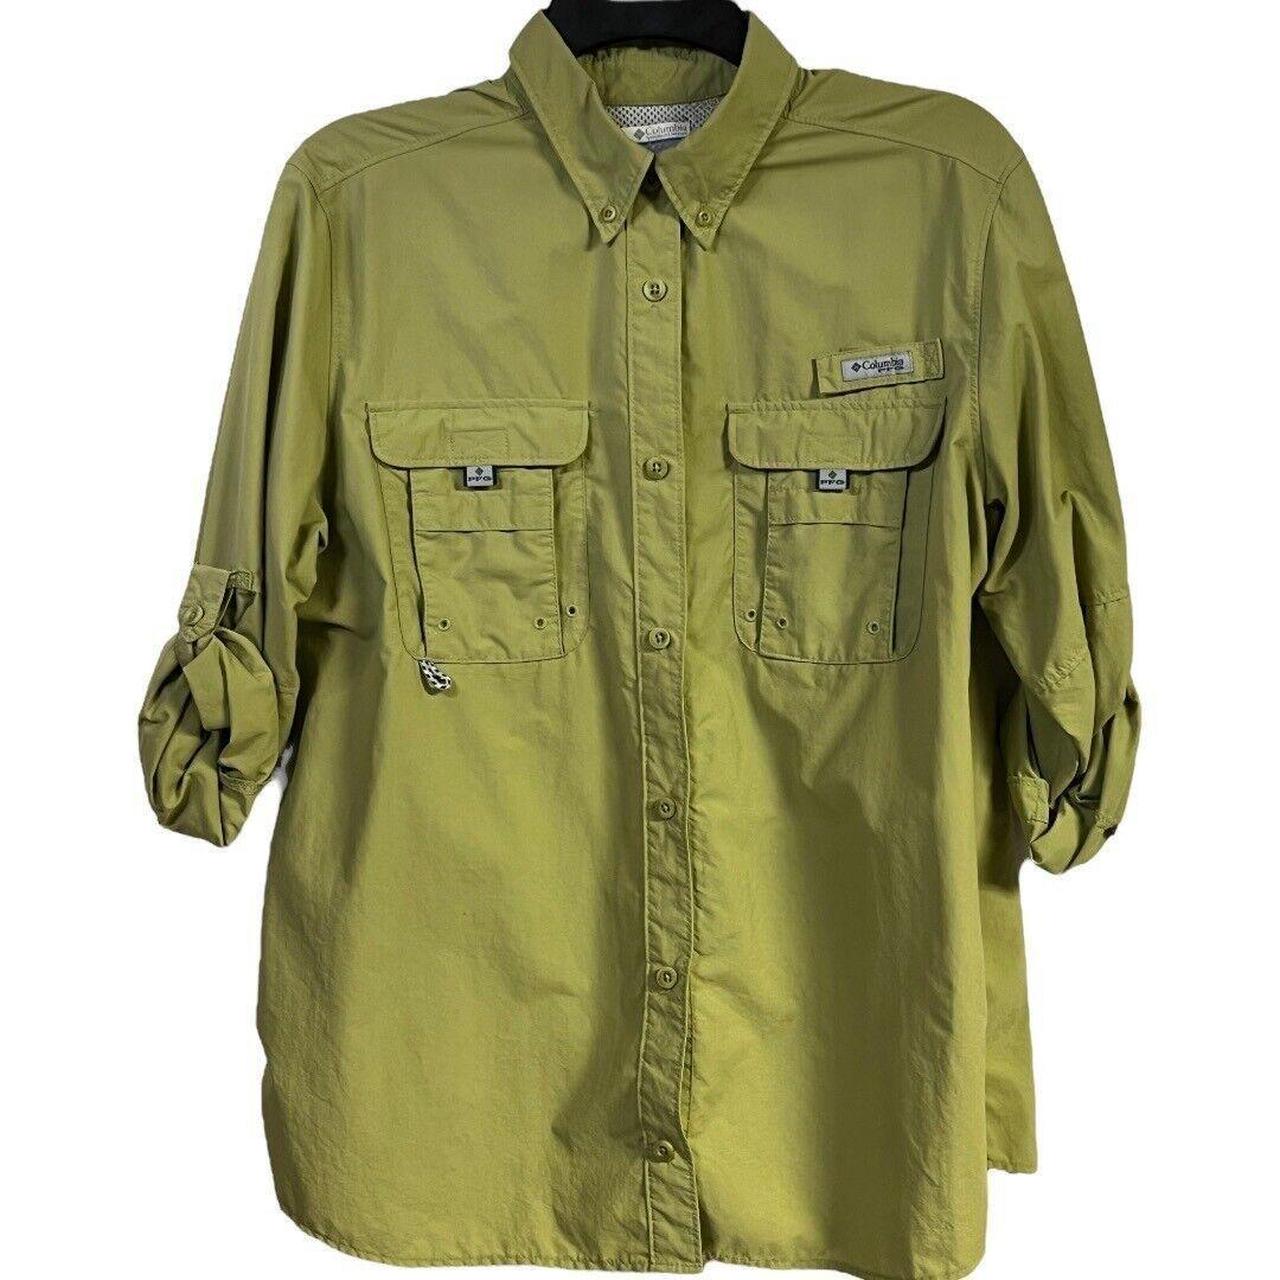 Sick Columbia Omni-shade fishing shirt!! - size - Depop